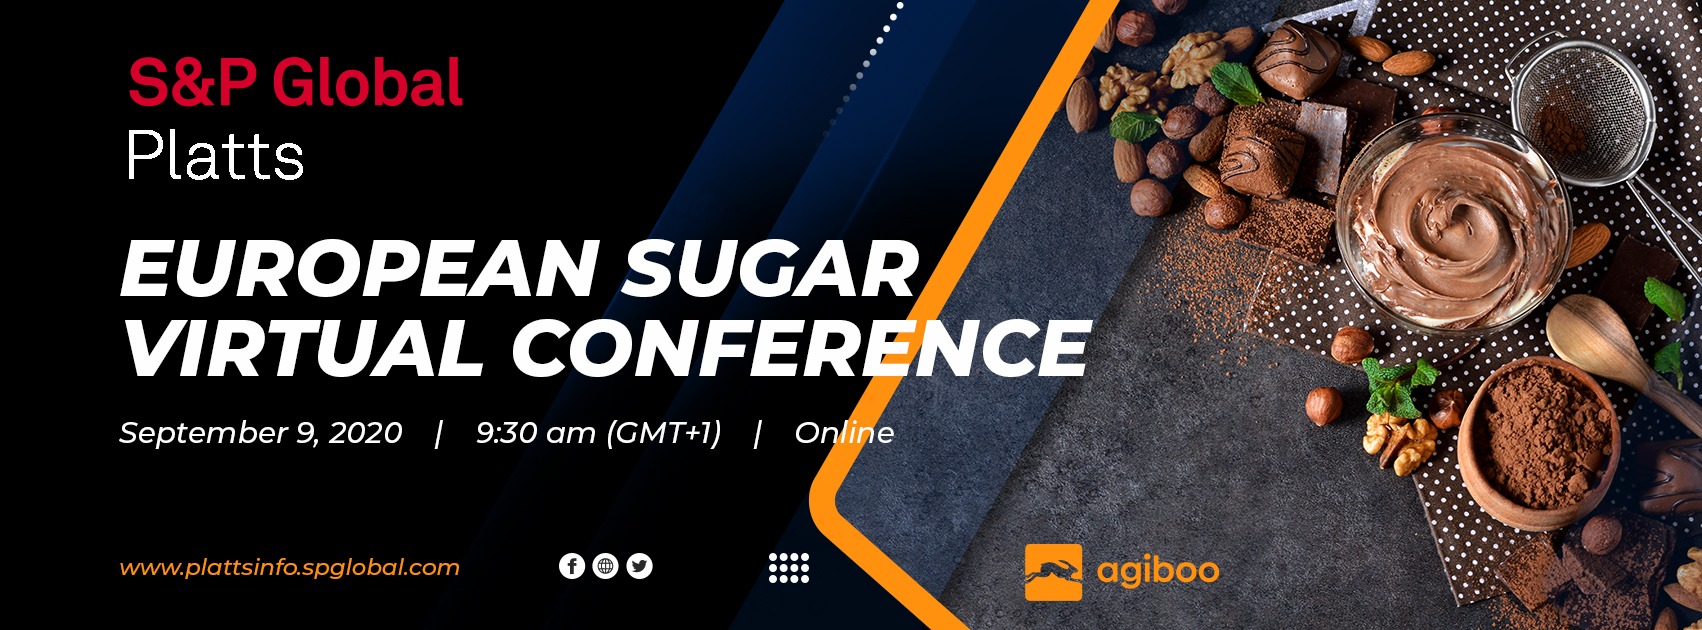 Banner Europea Sugar Virtual Conference 2020